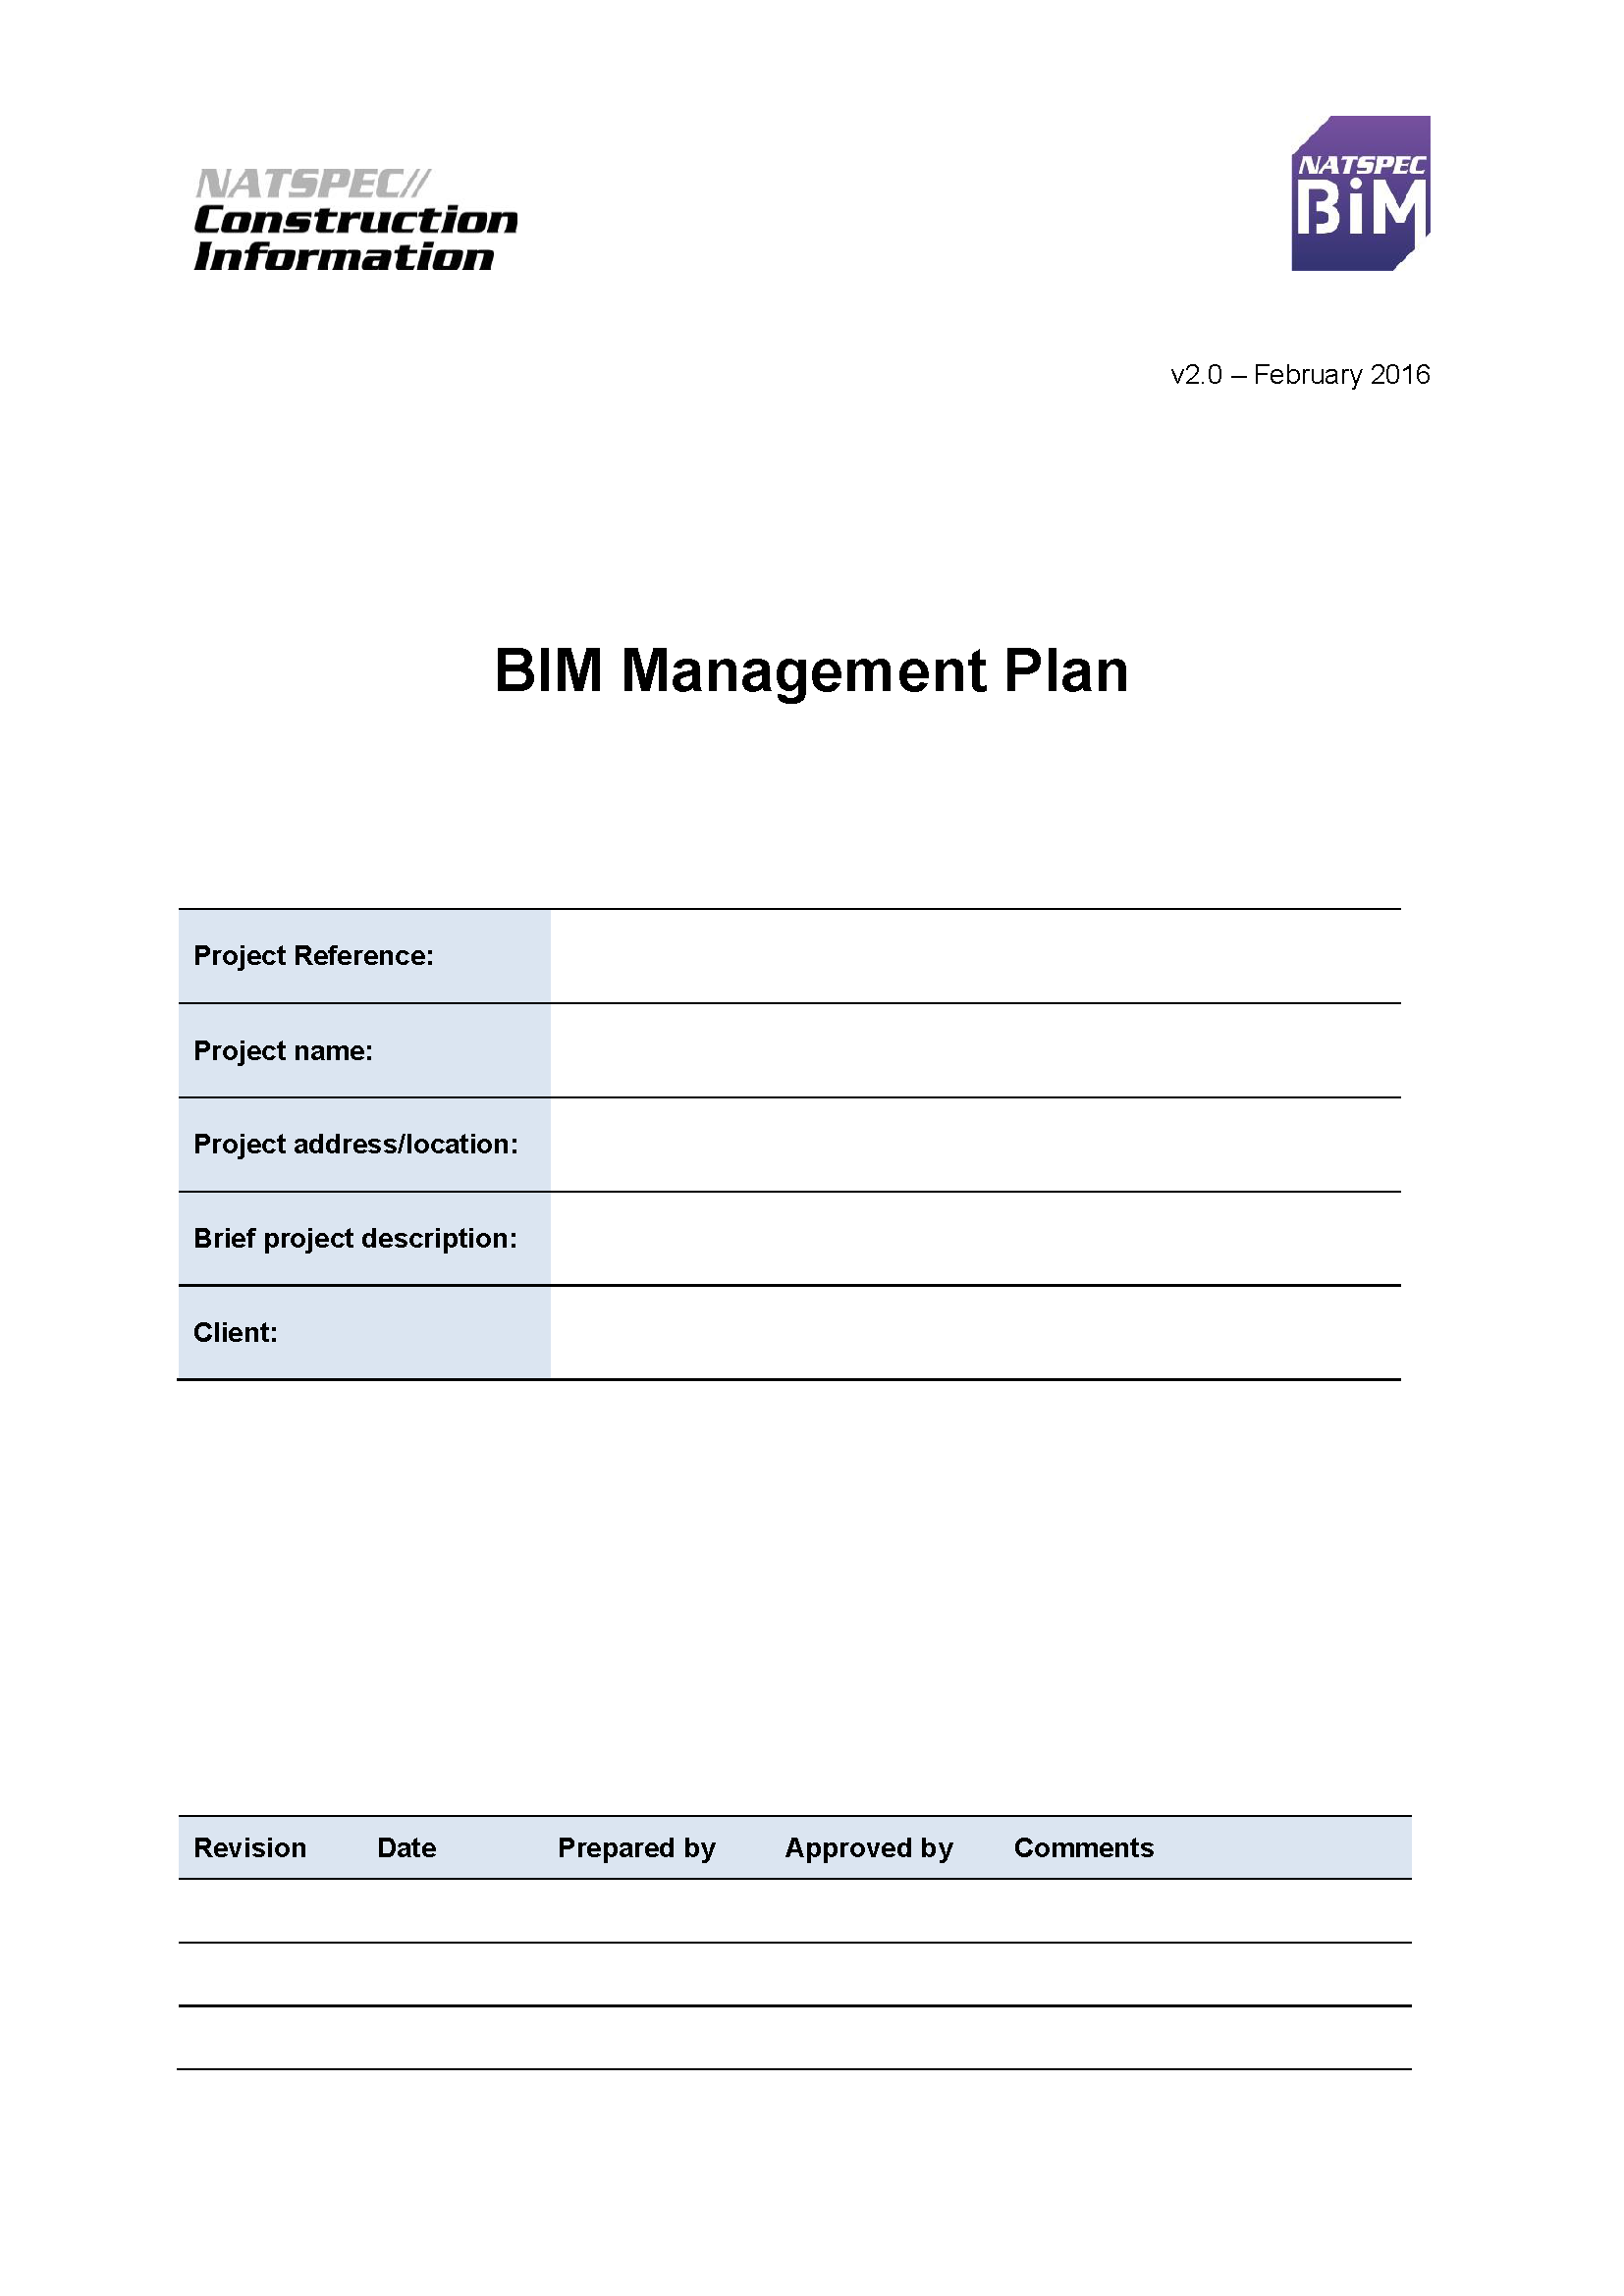 NATSPEC BIM Management Plan Templates